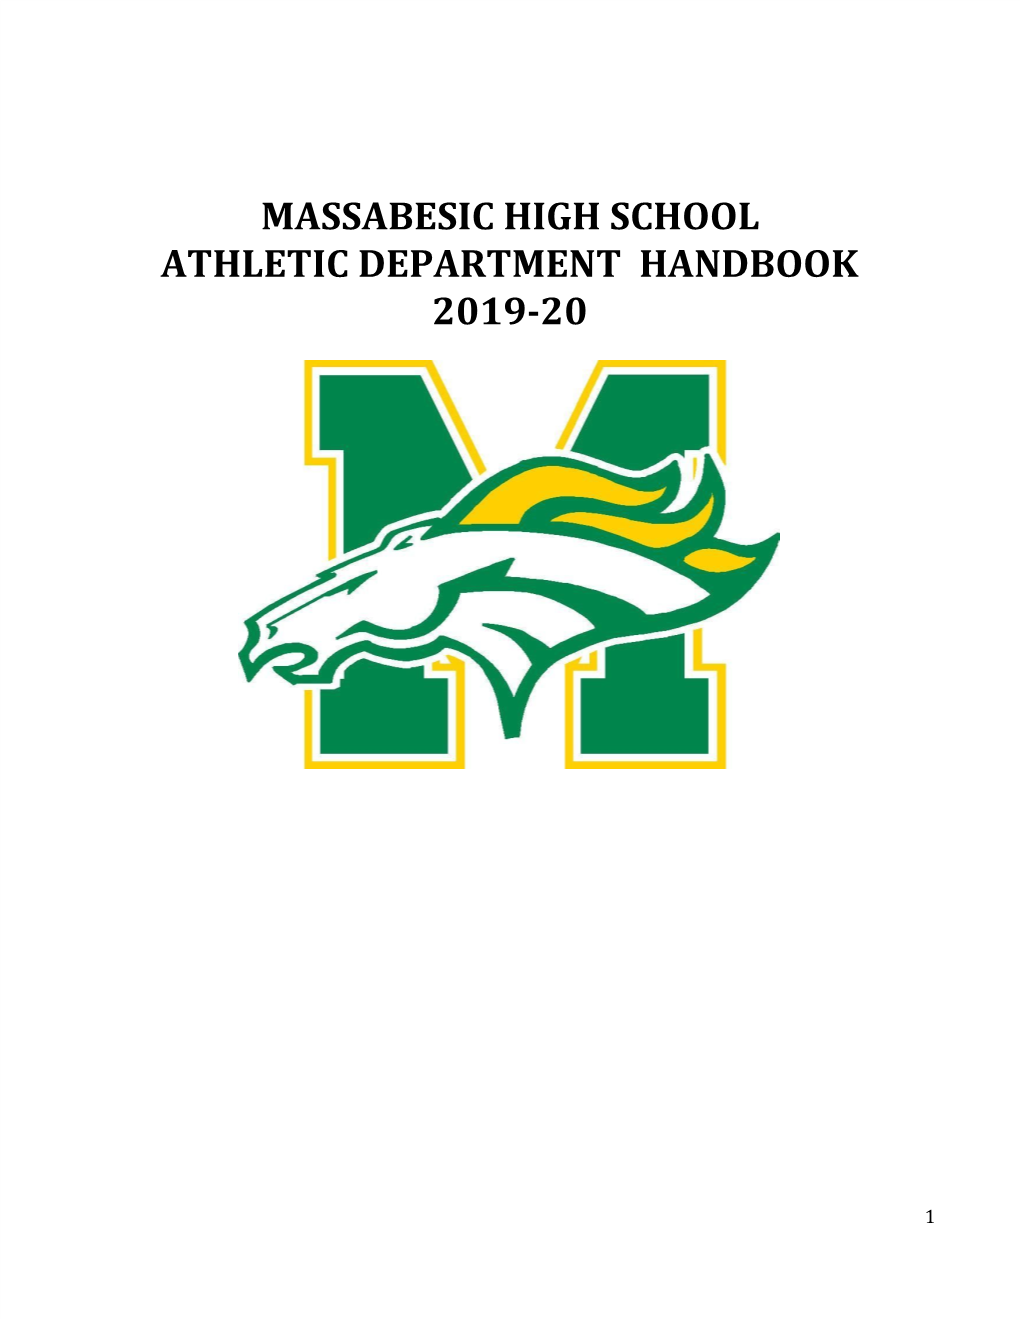 Massabesic High School Athletic Department Handbook 2019-20